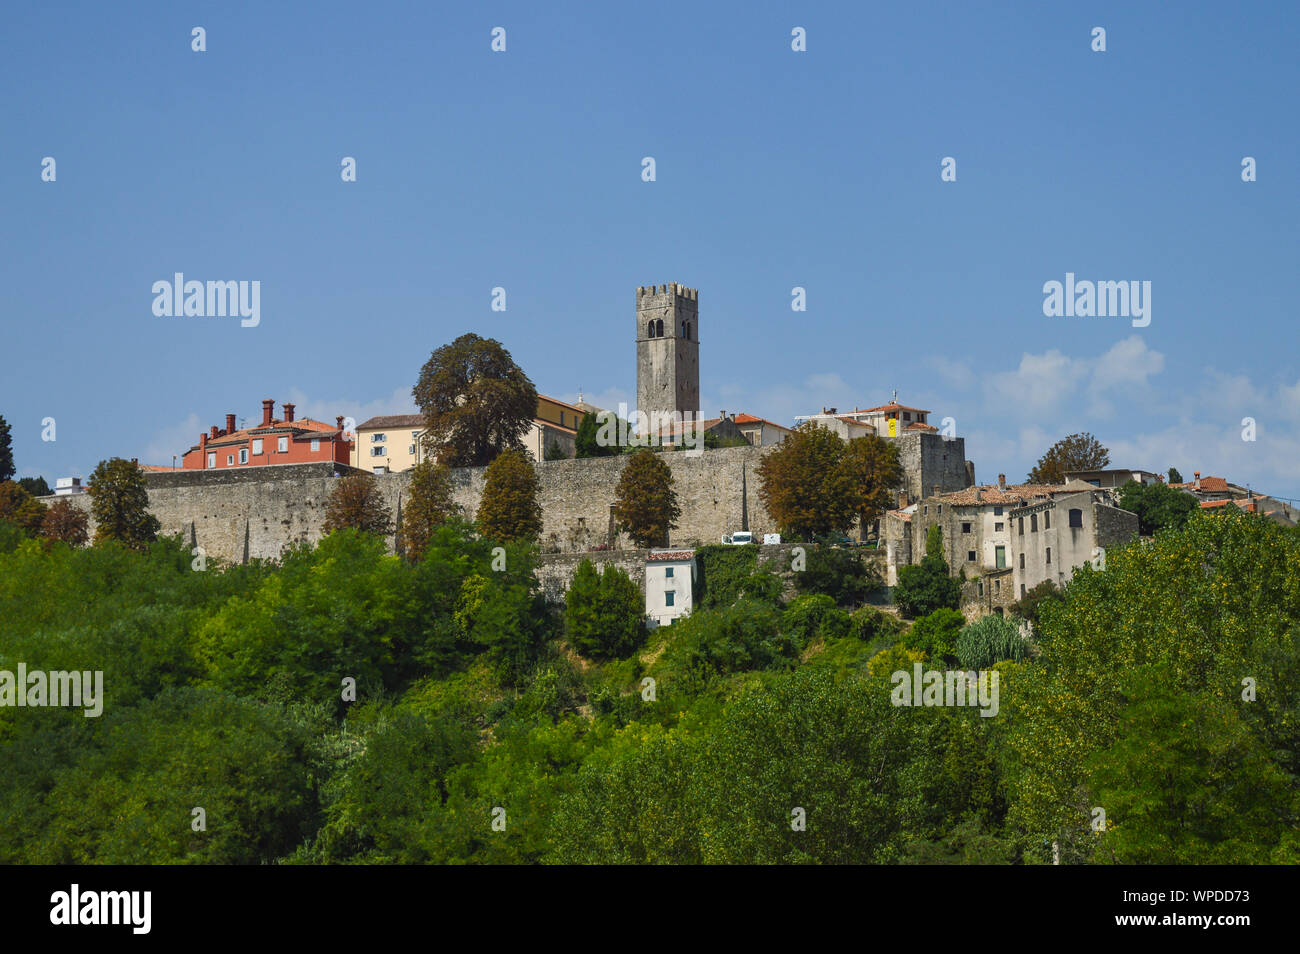 Istrian town Motovun built on top of hill, Croatia Stock Photo